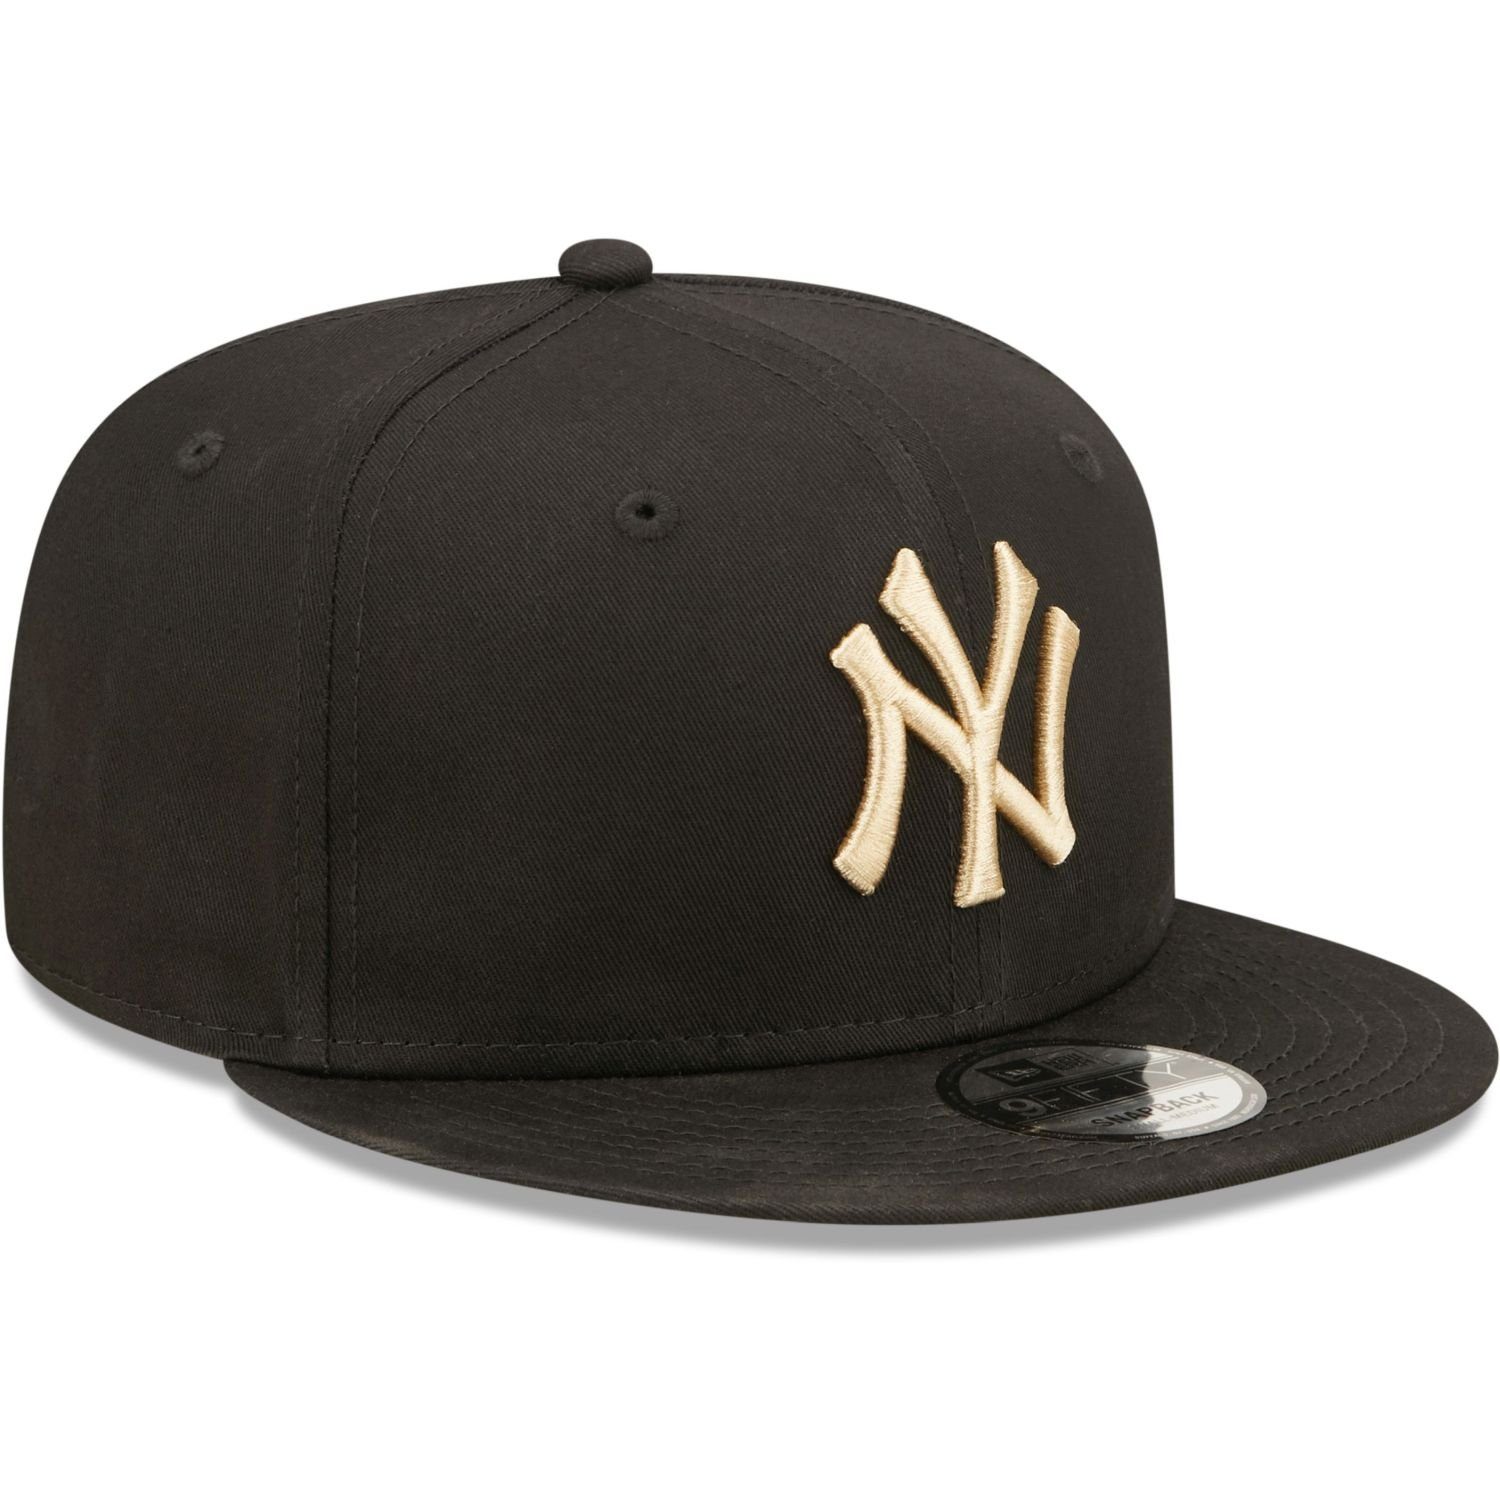 Cap 9Fifty Yankees schwarz Snapback Era York New New